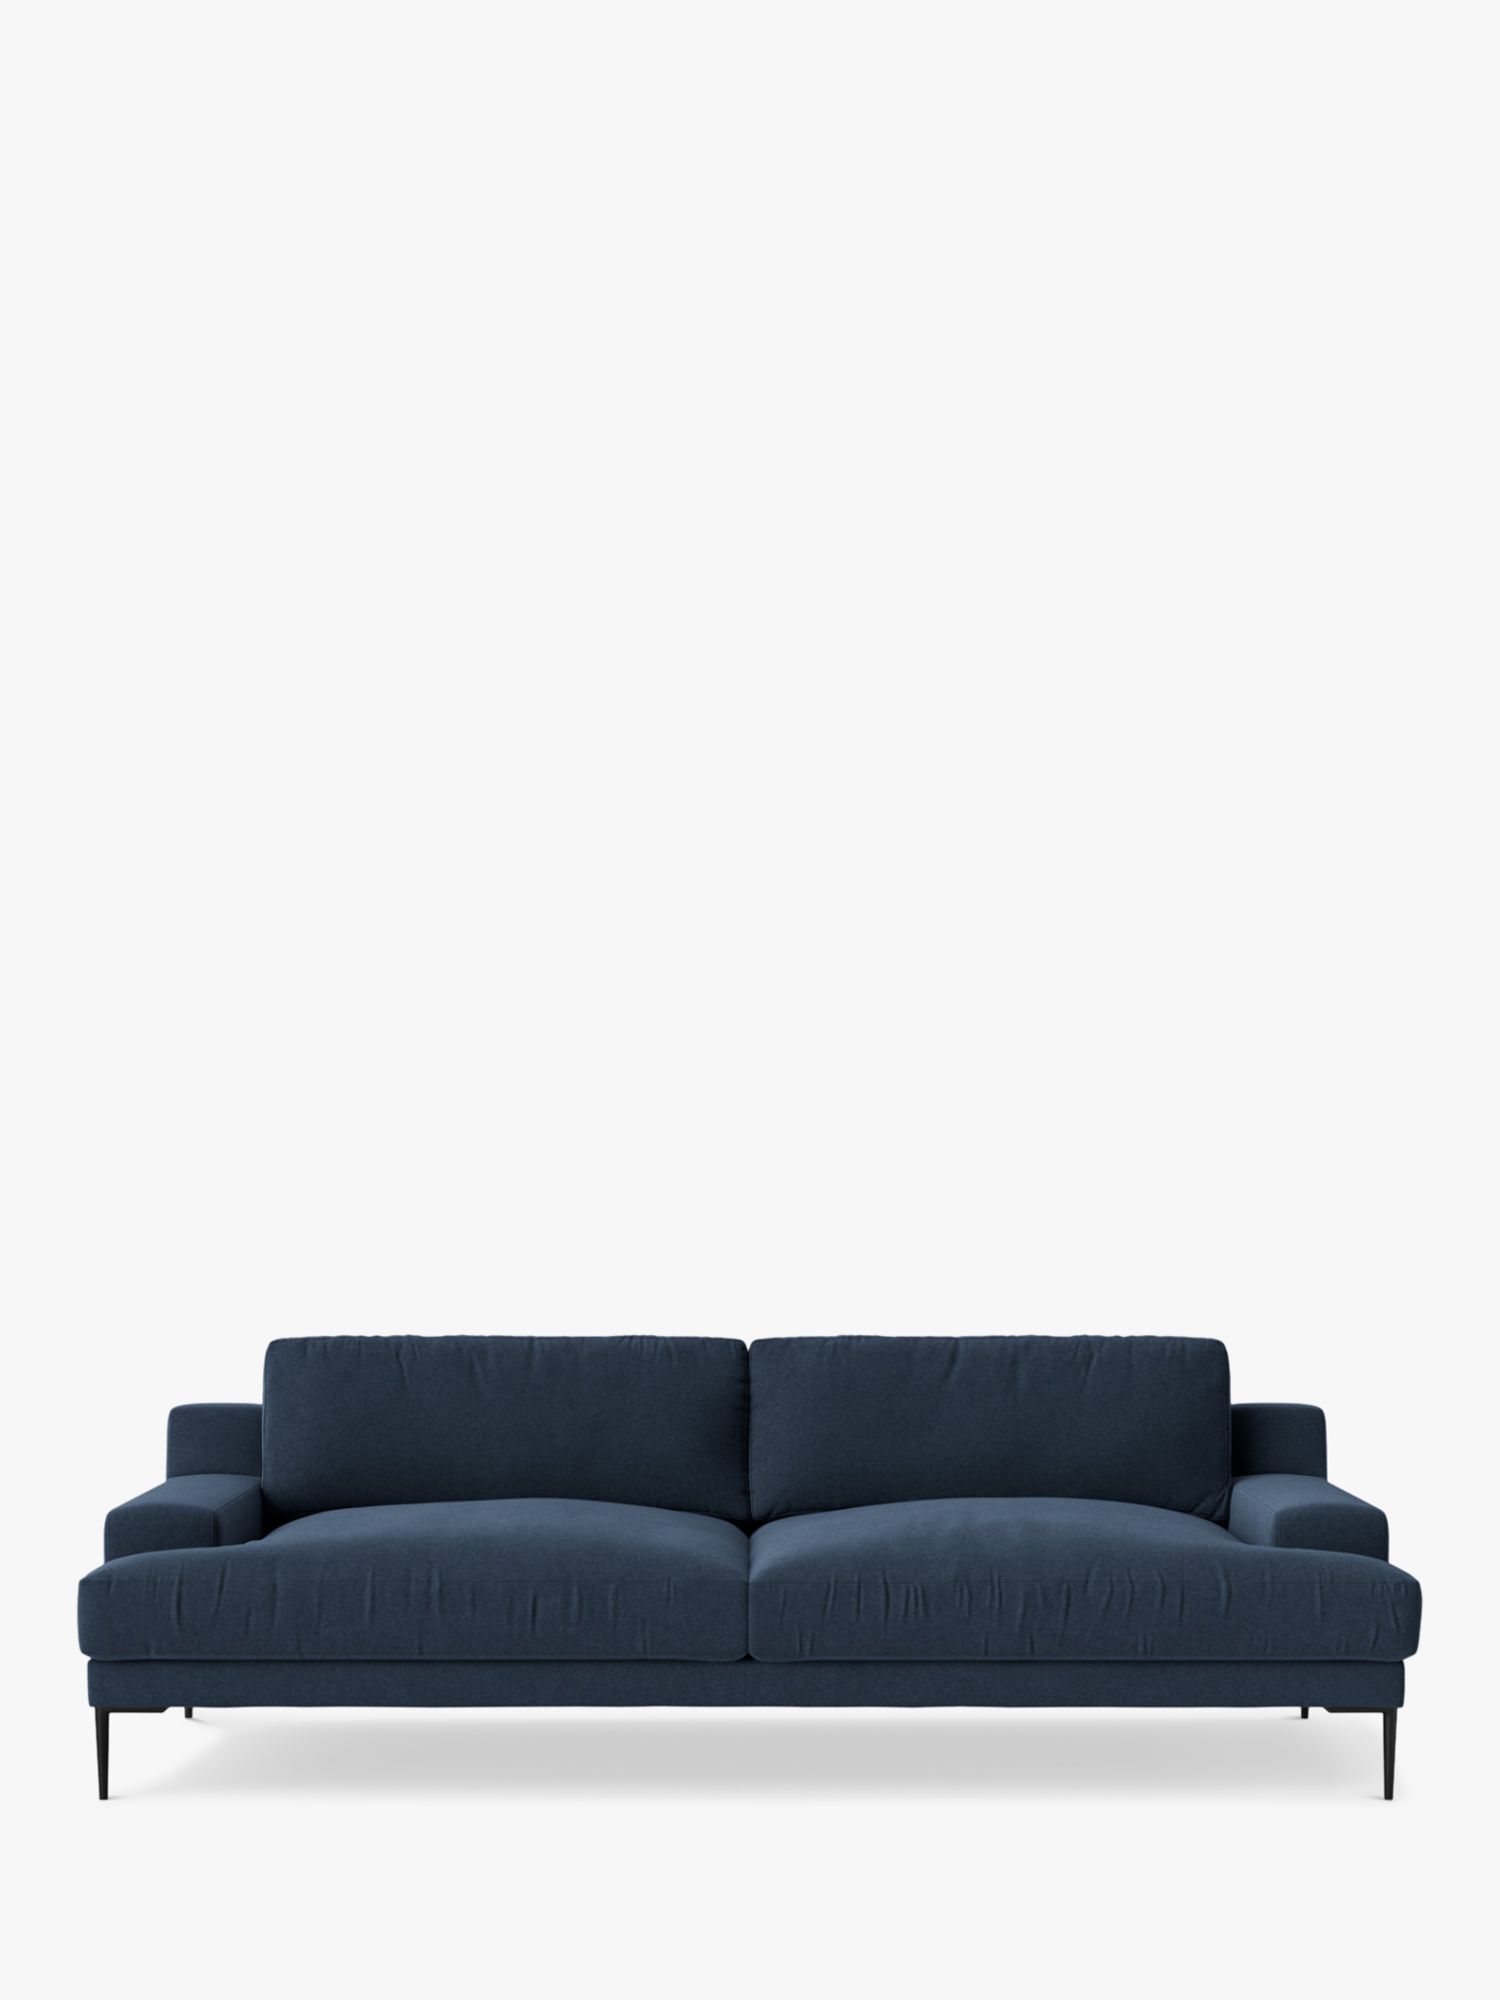 Almera Range, Swoon Almera Large 3 Seater Sofa, Metal Leg, Smart Wool Indigo